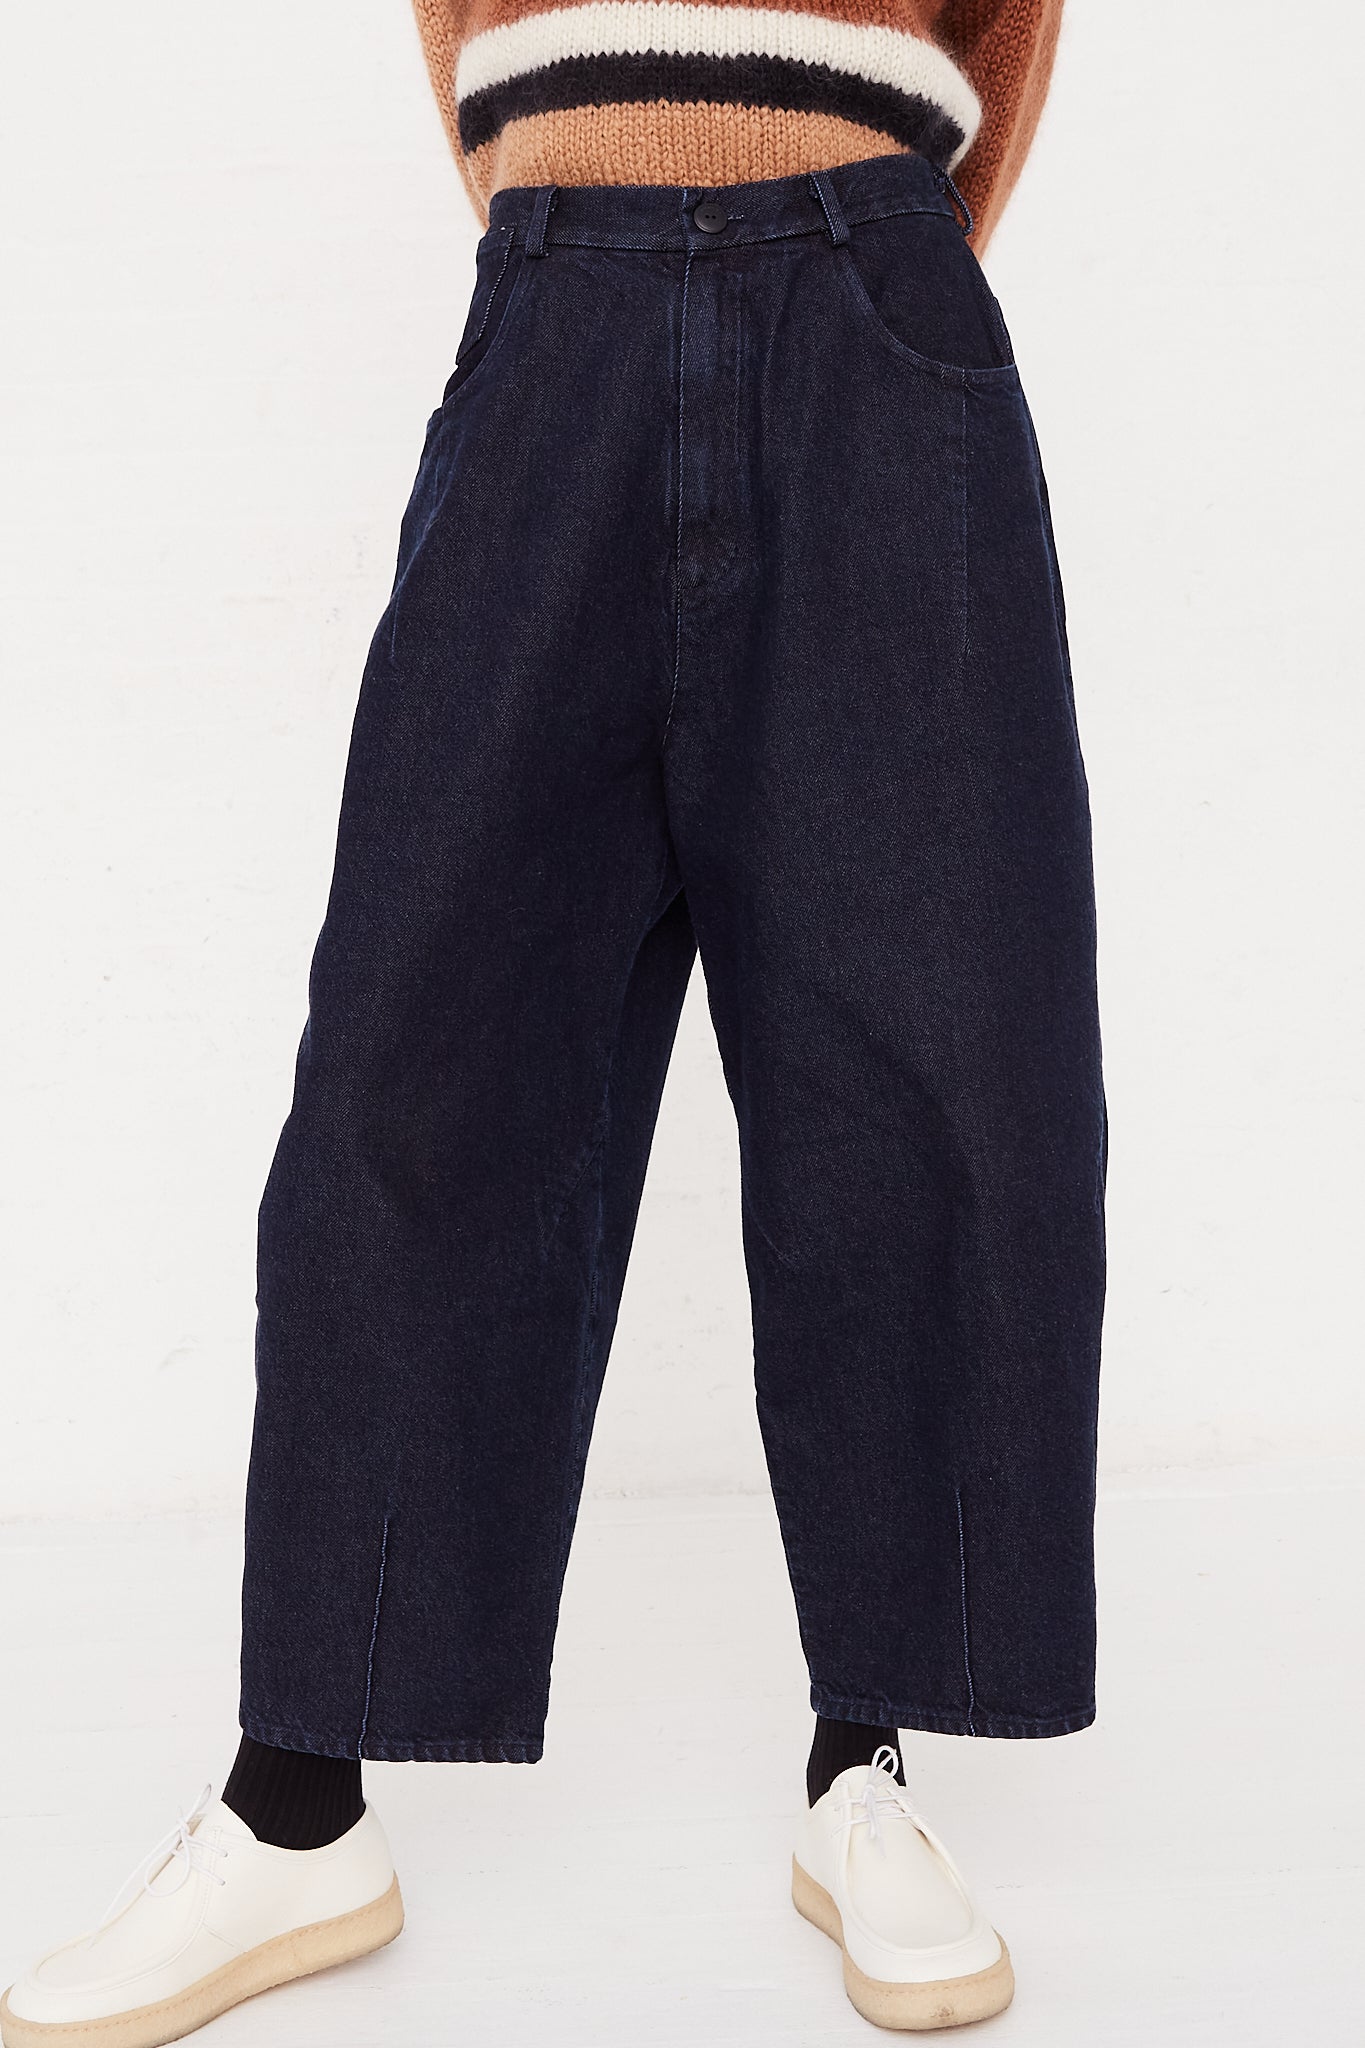 CORDERA Baggy Pant in Denim | Oroboro Store | Front image upclose of denim on model